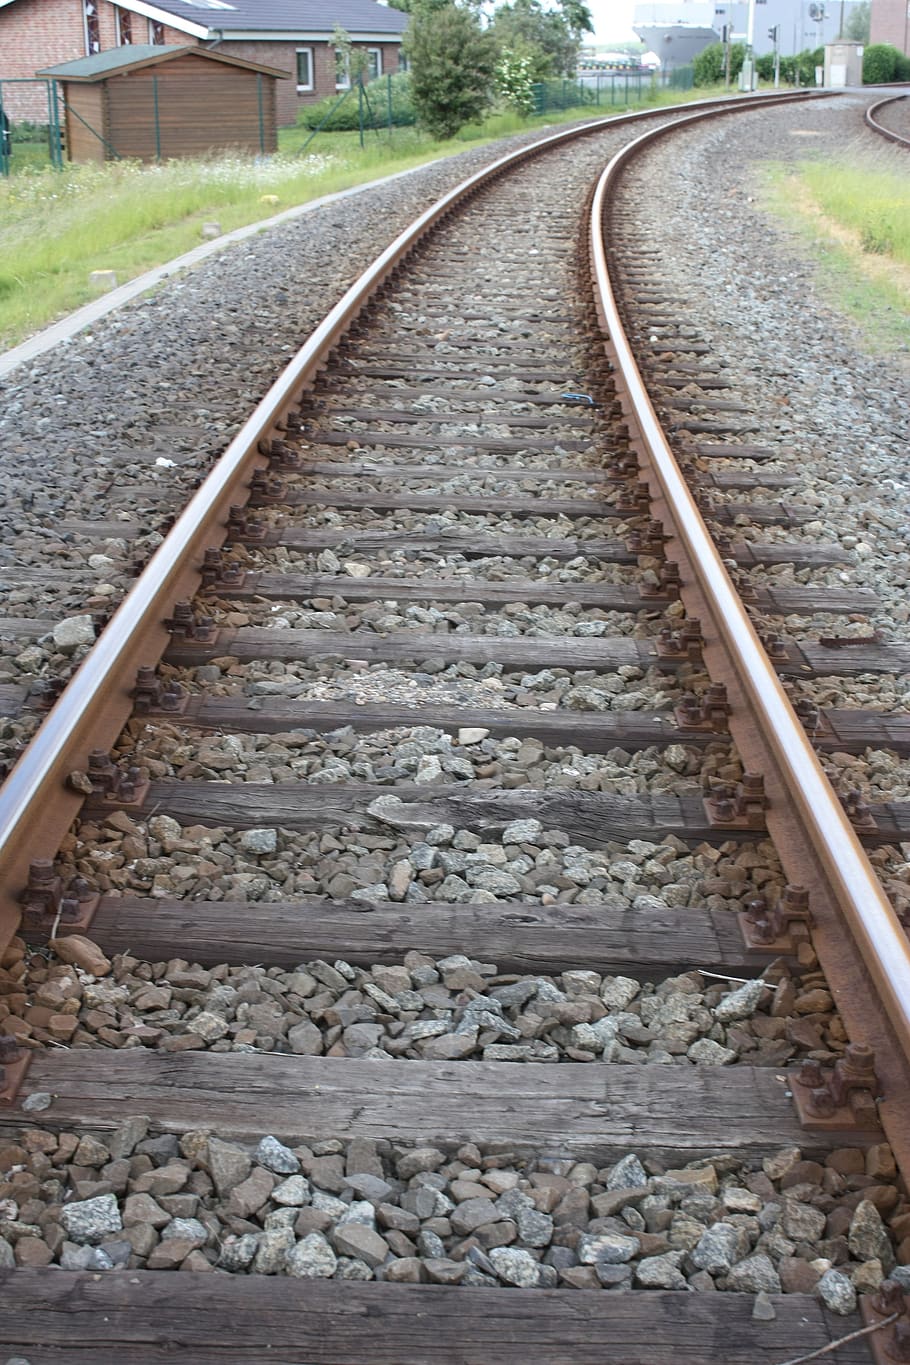 track, rails, threshold, cargo, railway tracks, railway, train, rail traffic, lonely, loneliness